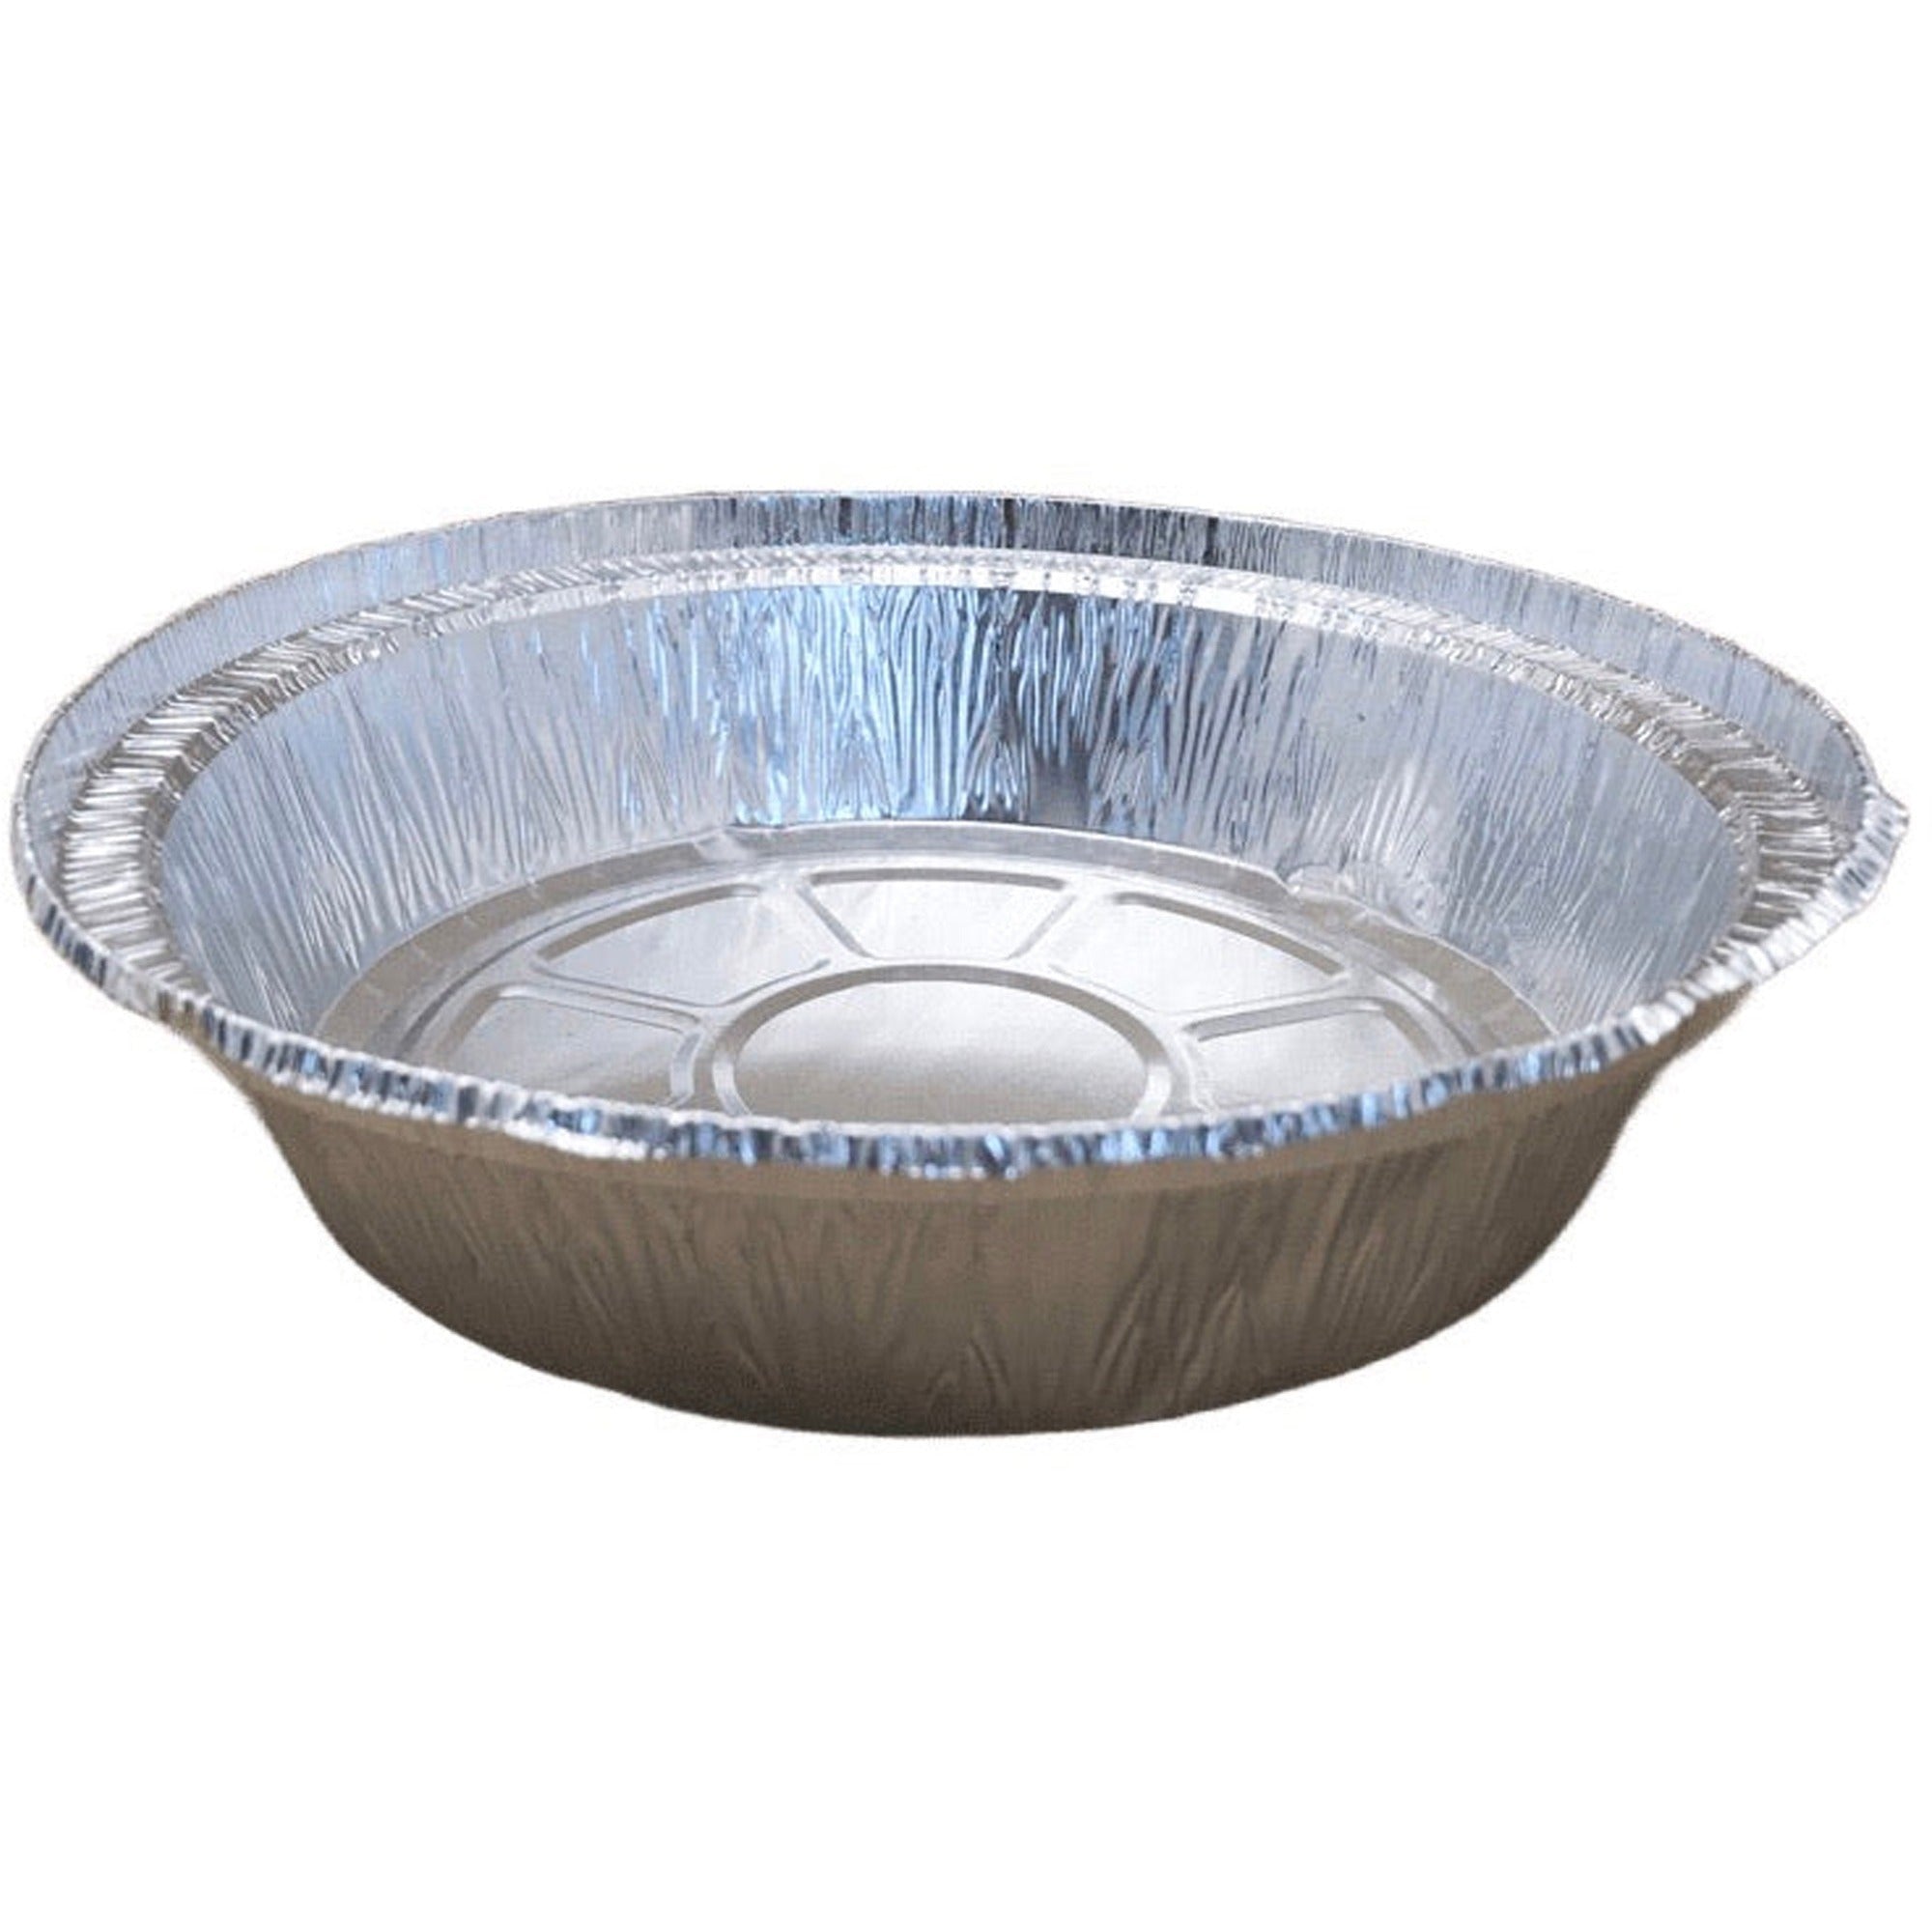 sepg-banyan-aluminum-foil-round-pans-serving-food-transporting-storing-silver-aluminum-body-round-500-carton_egs600250 - 1